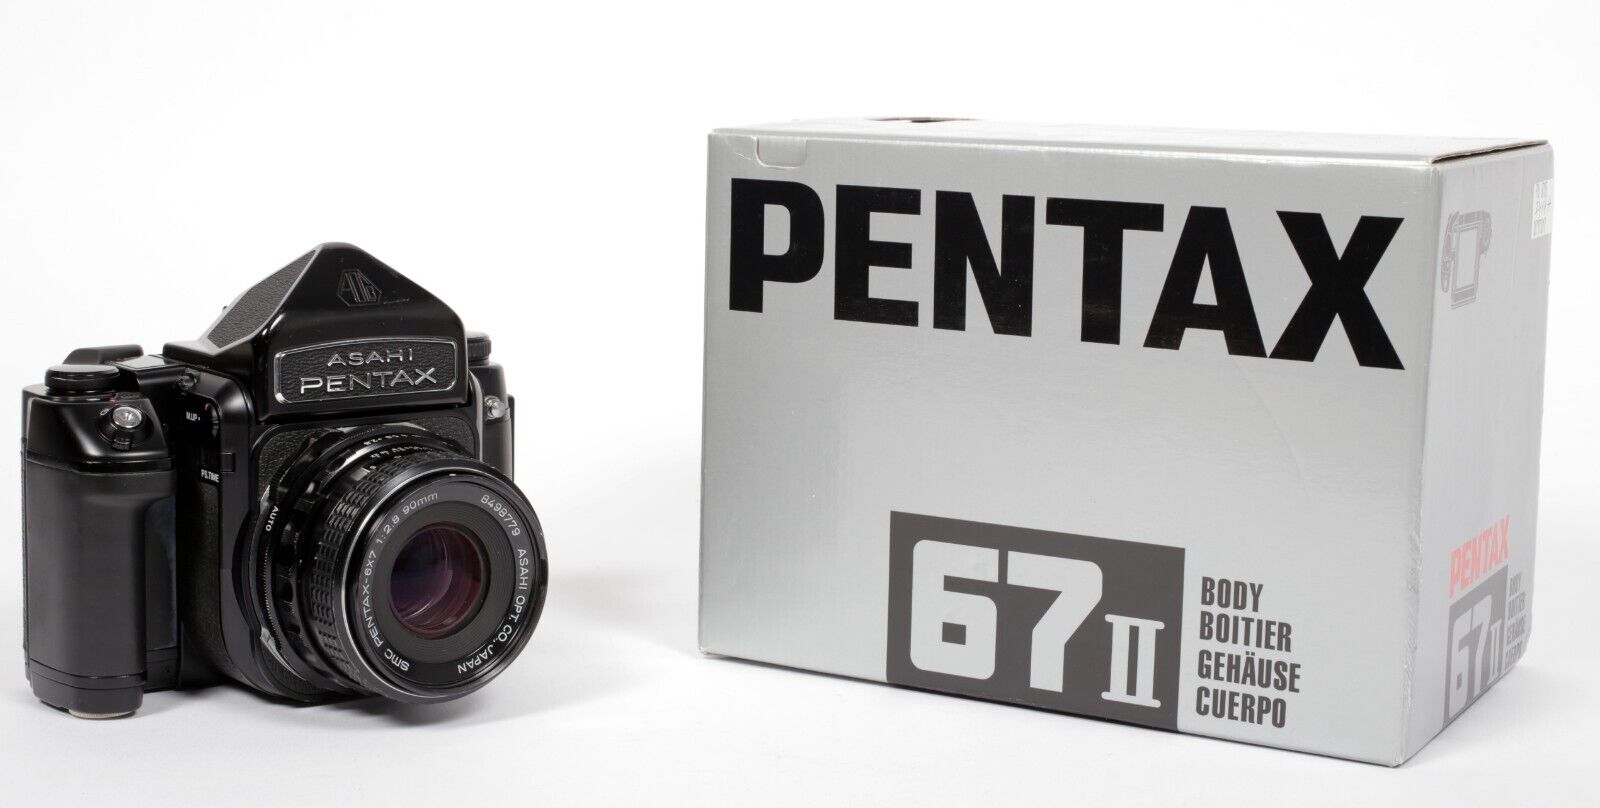 Pentax 67 II 6X7 camera with SMC 90mm F2.8 lens #455